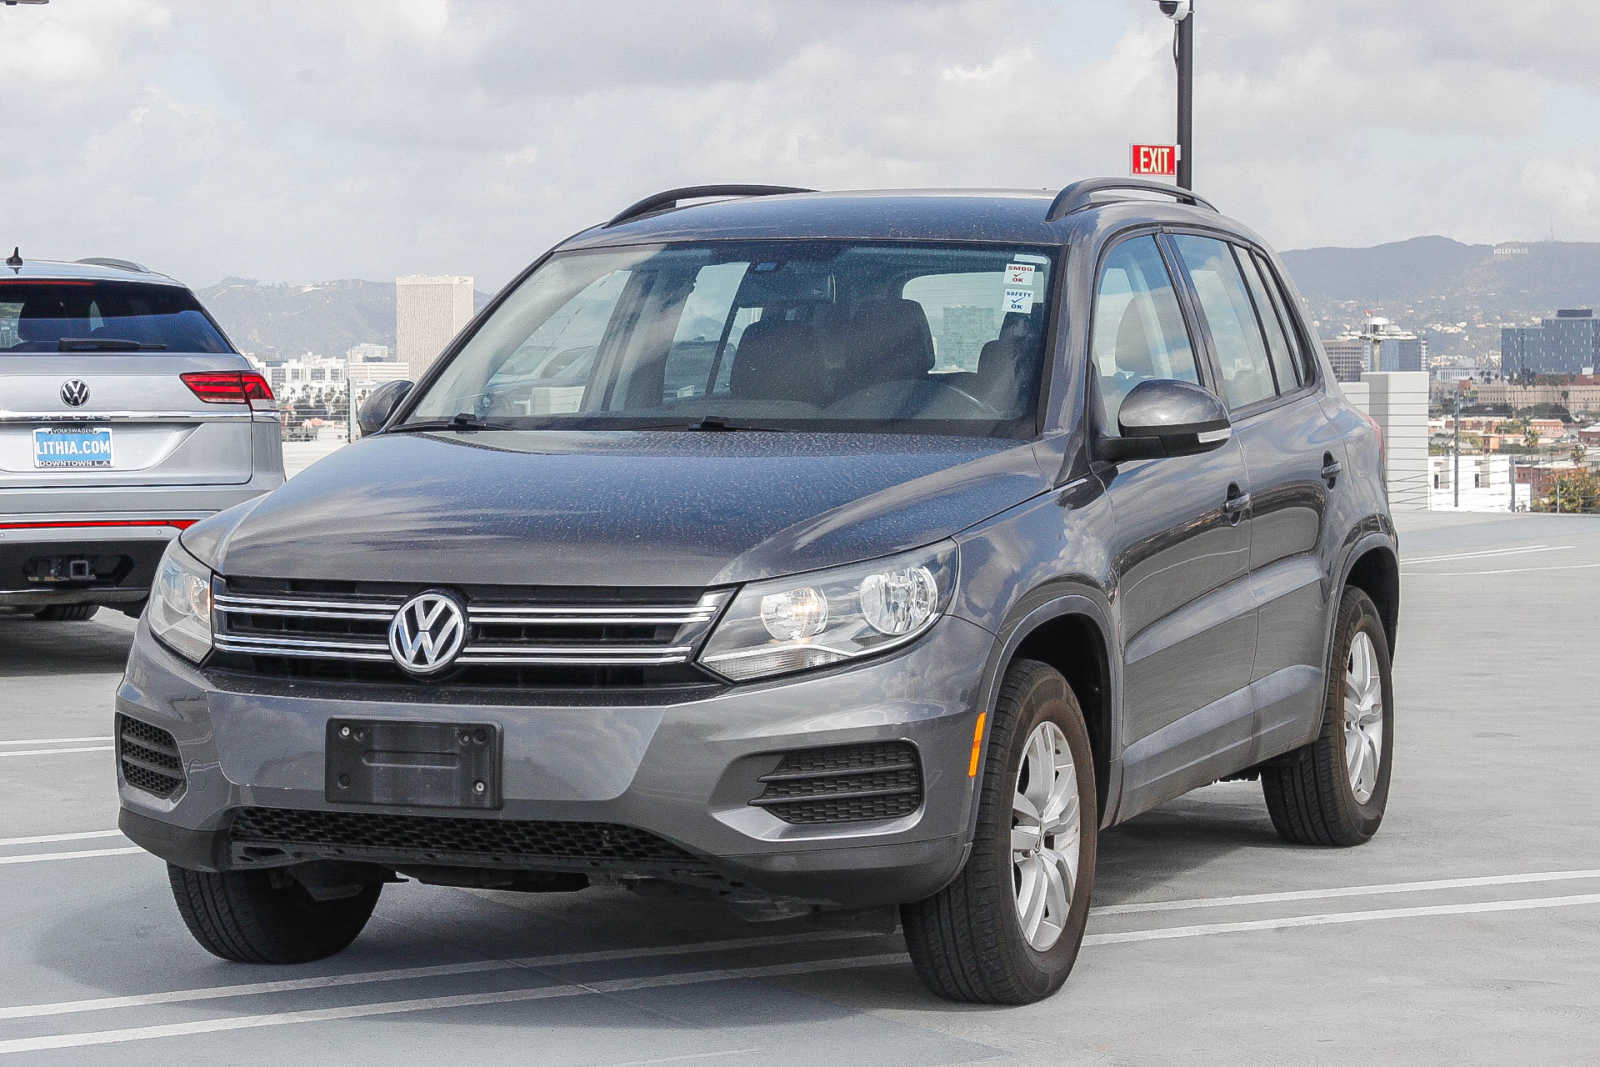 2017 Volkswagen Tiguan S -
                Los Angeles, CA